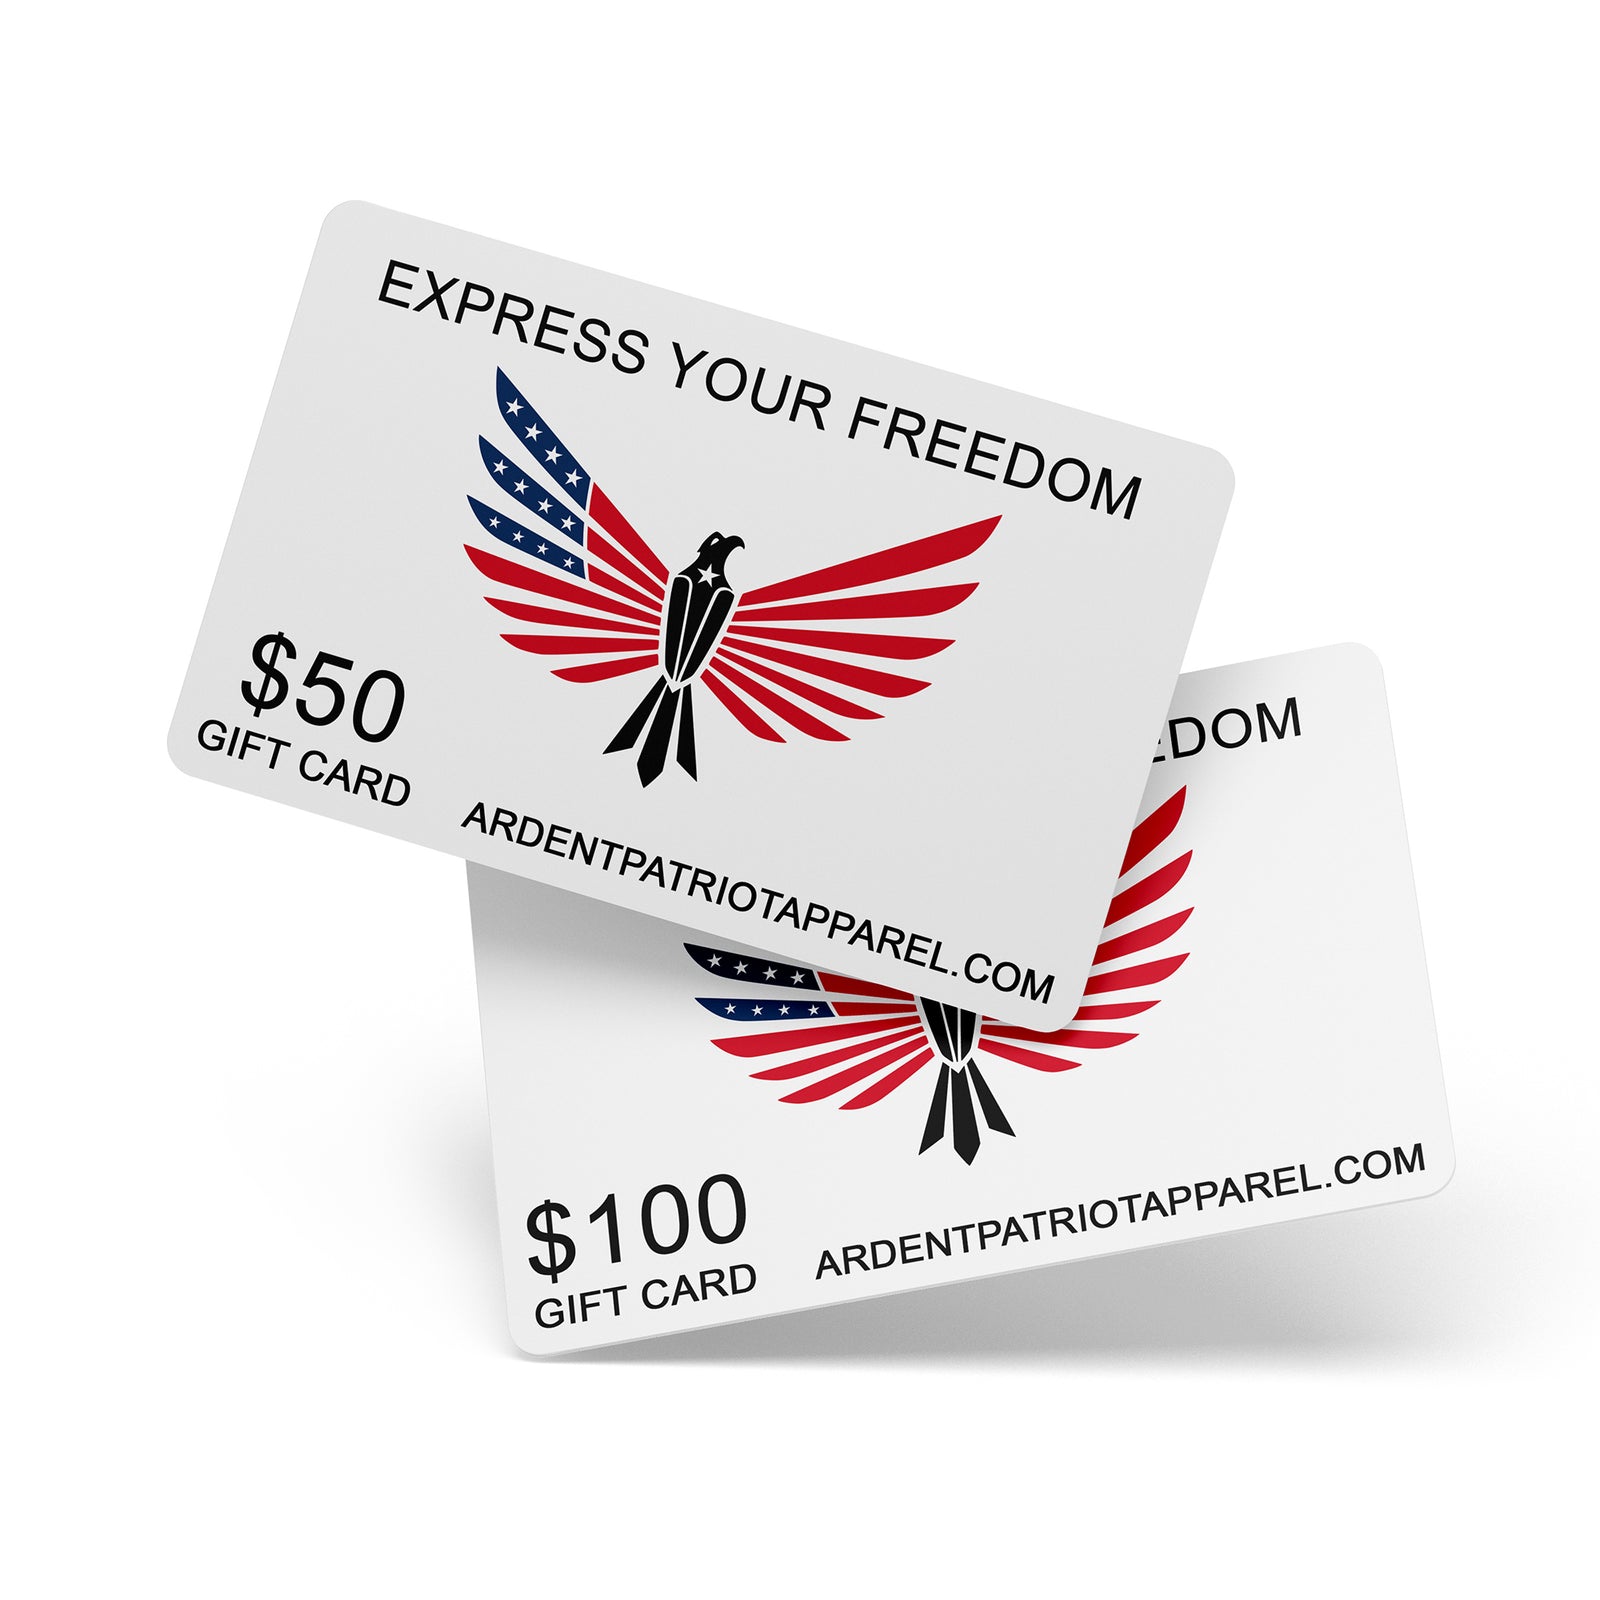 Ardent Patriot Apparel Co. Digital Gift Card-Gift Card-$10.00-Ardent Patriot Apparel Co.